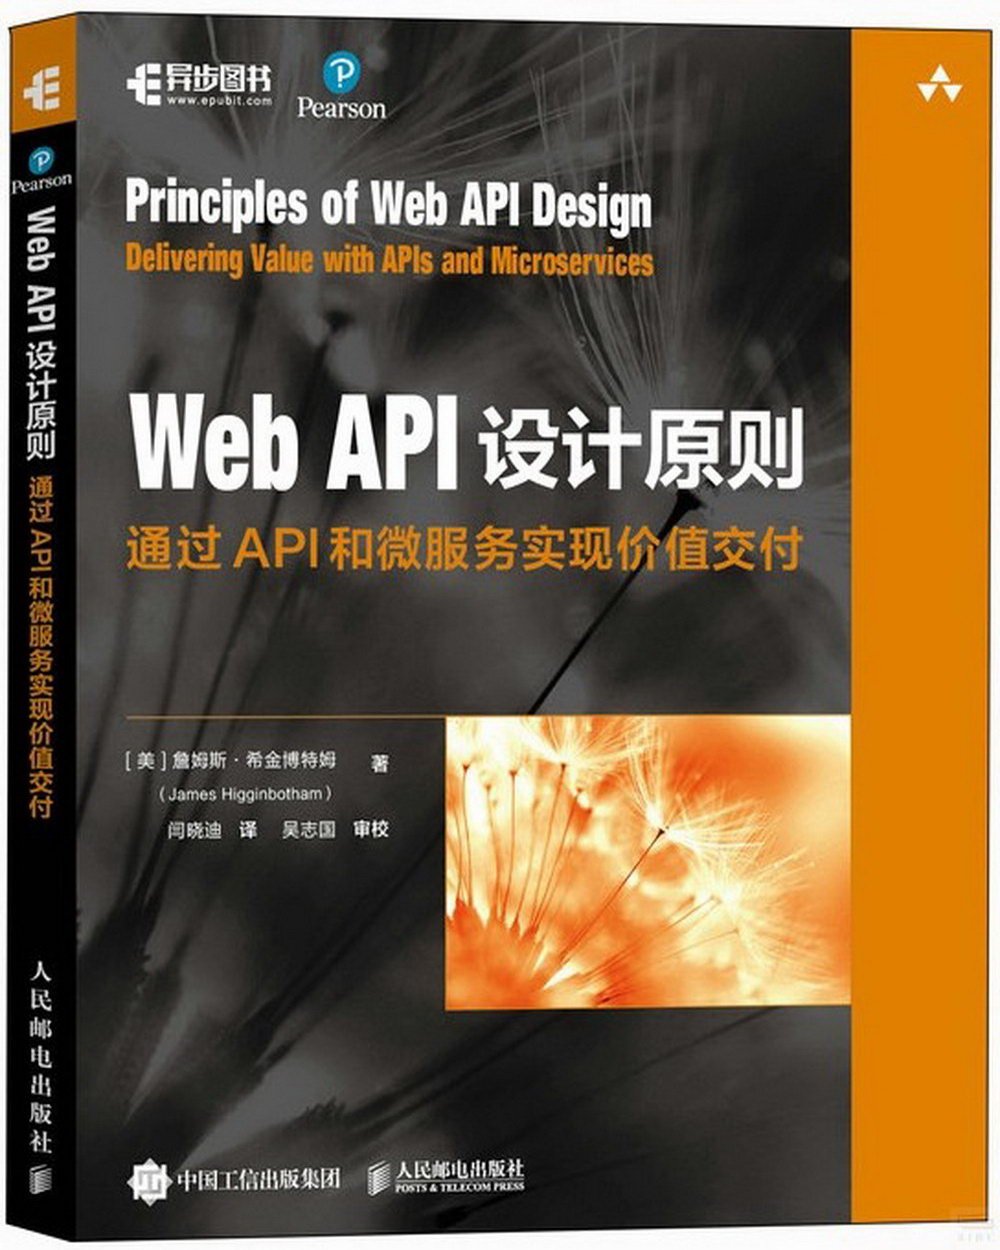 Web API設計原則通過API和微服務實現價值交付